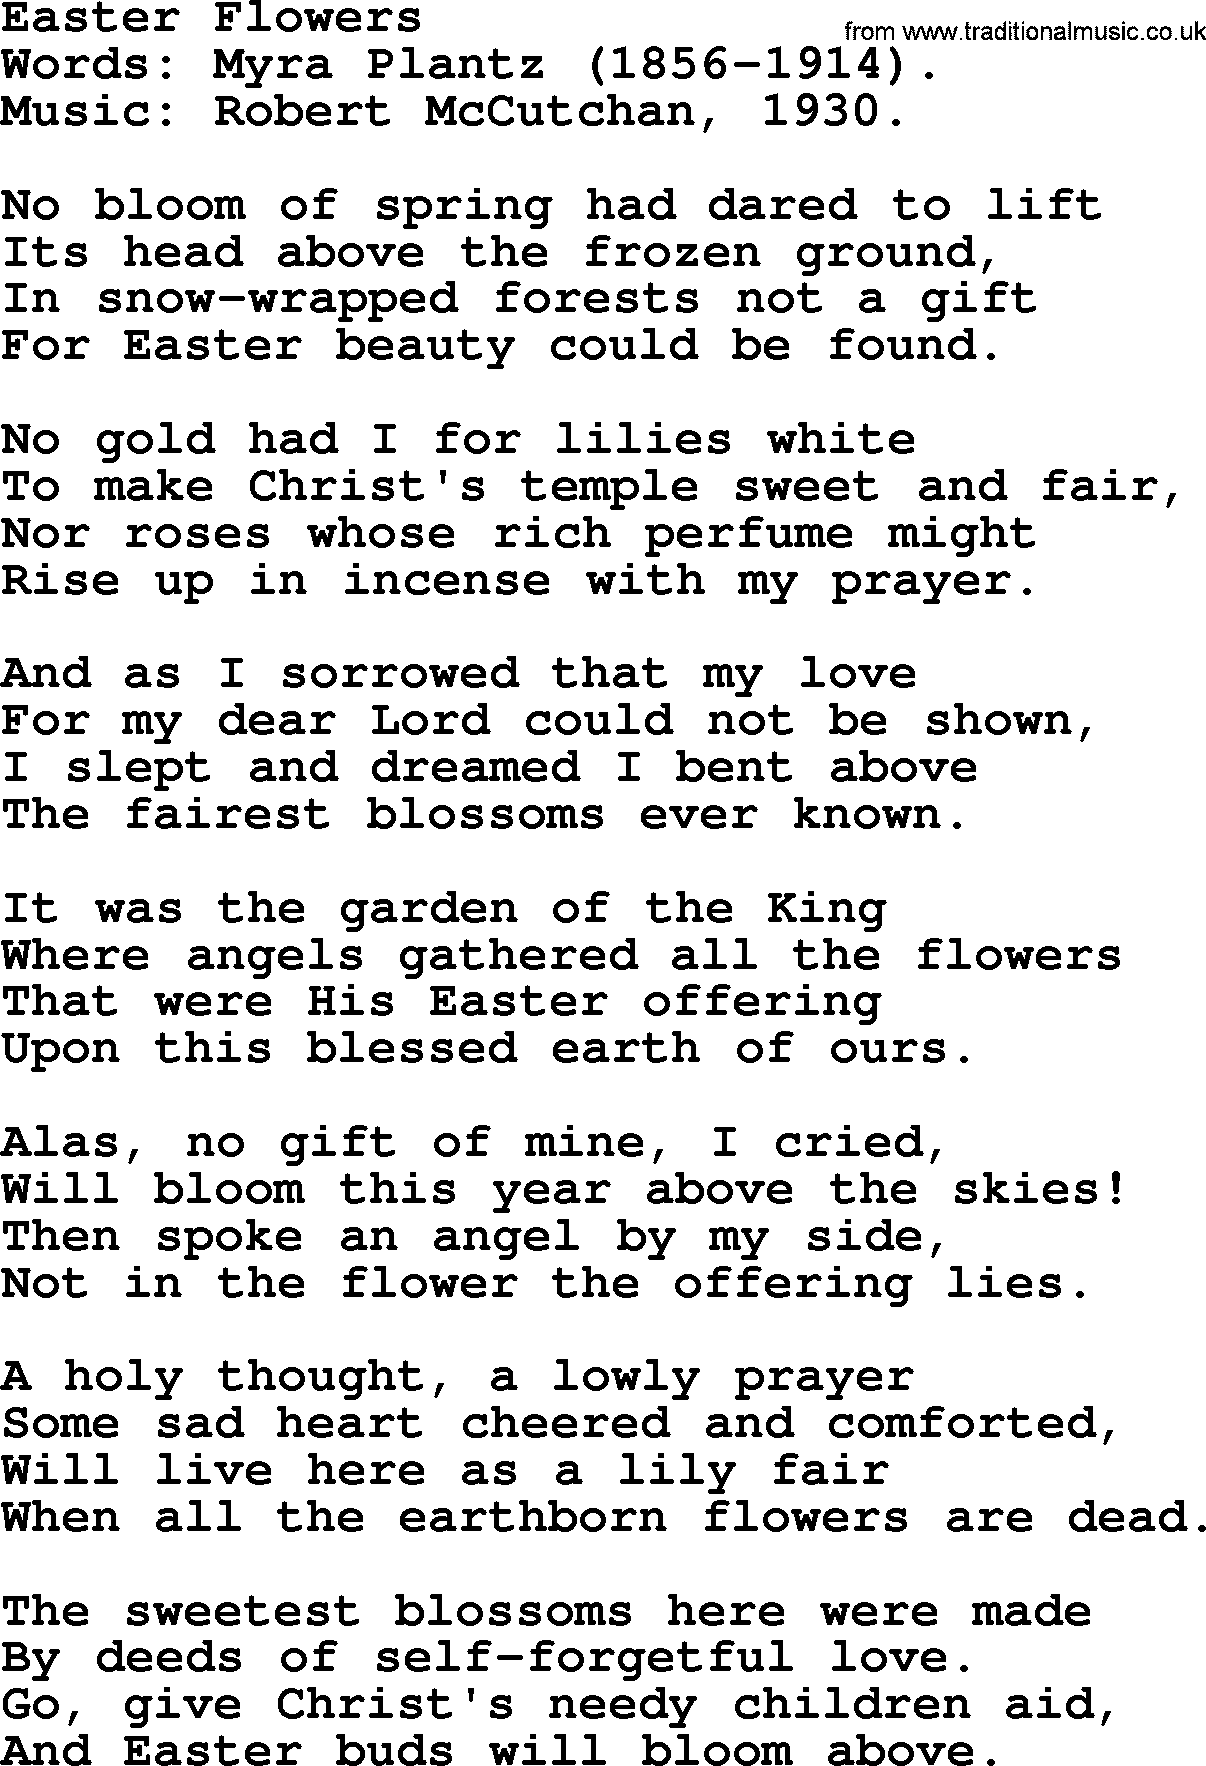 Easter Hymns, Hymn: Easter Flowers, lyrics with PDF